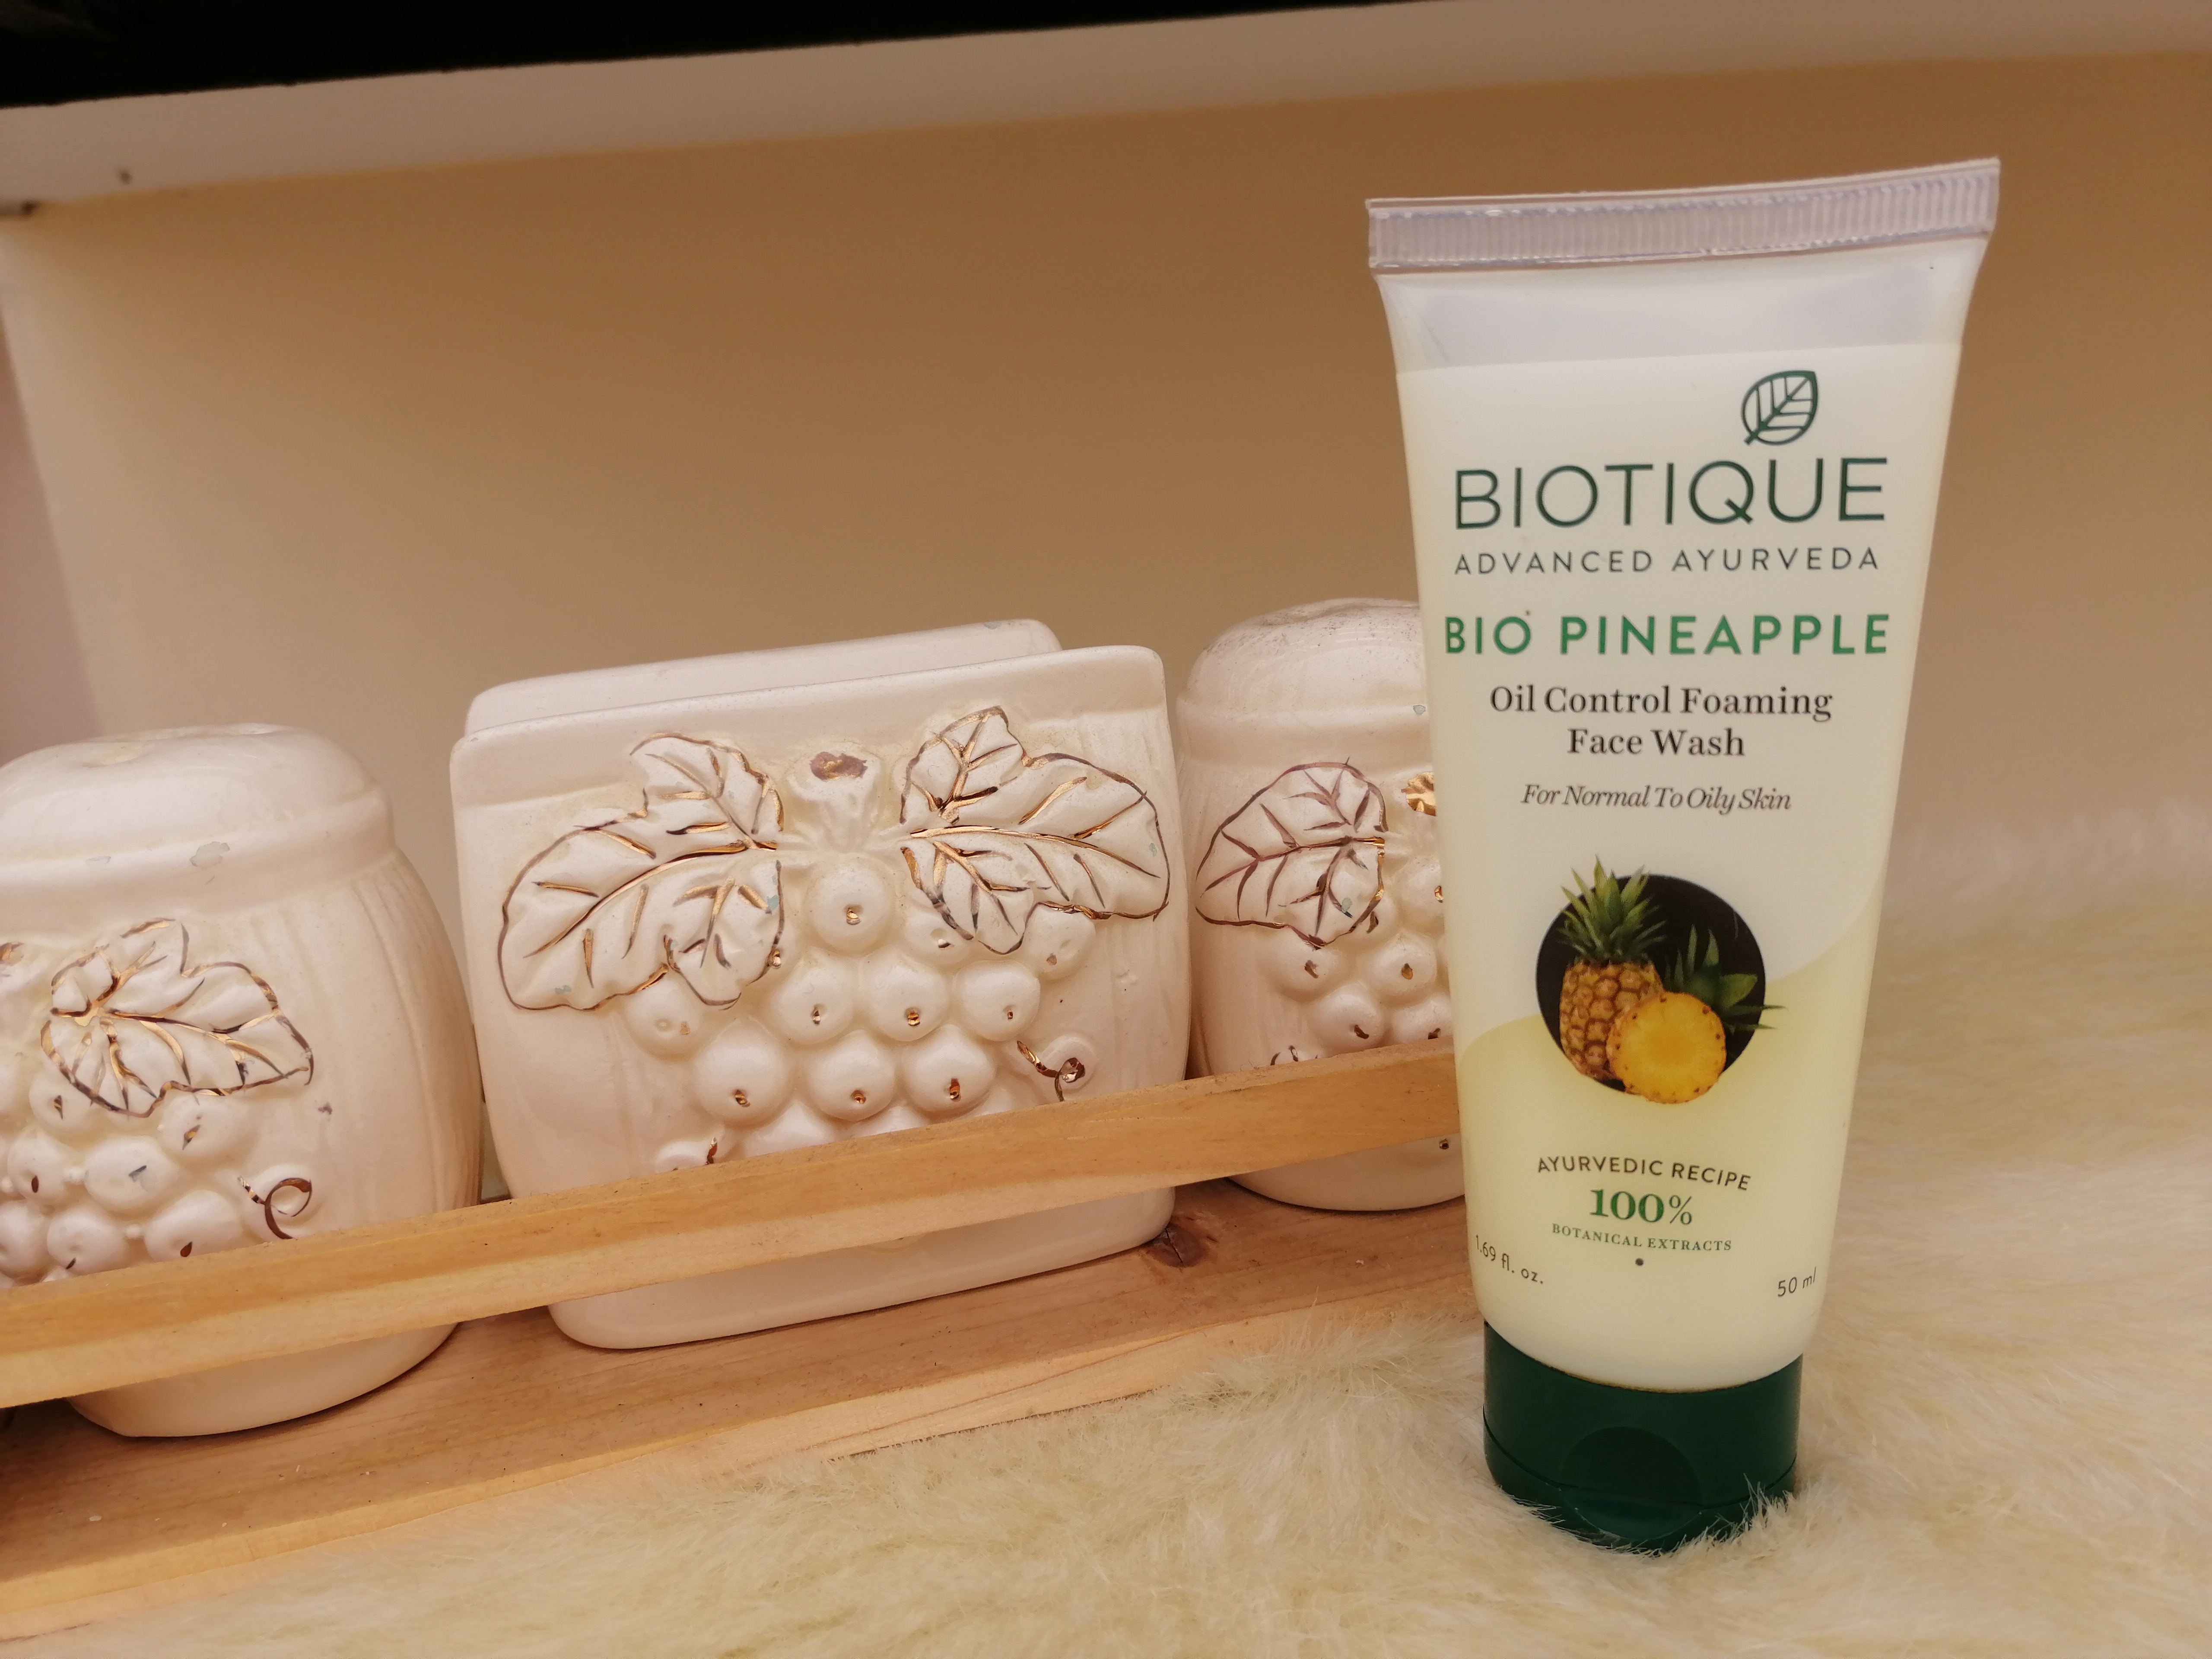 Biotique Bio Pineapple Oil Control Foaming Face Wash| Review